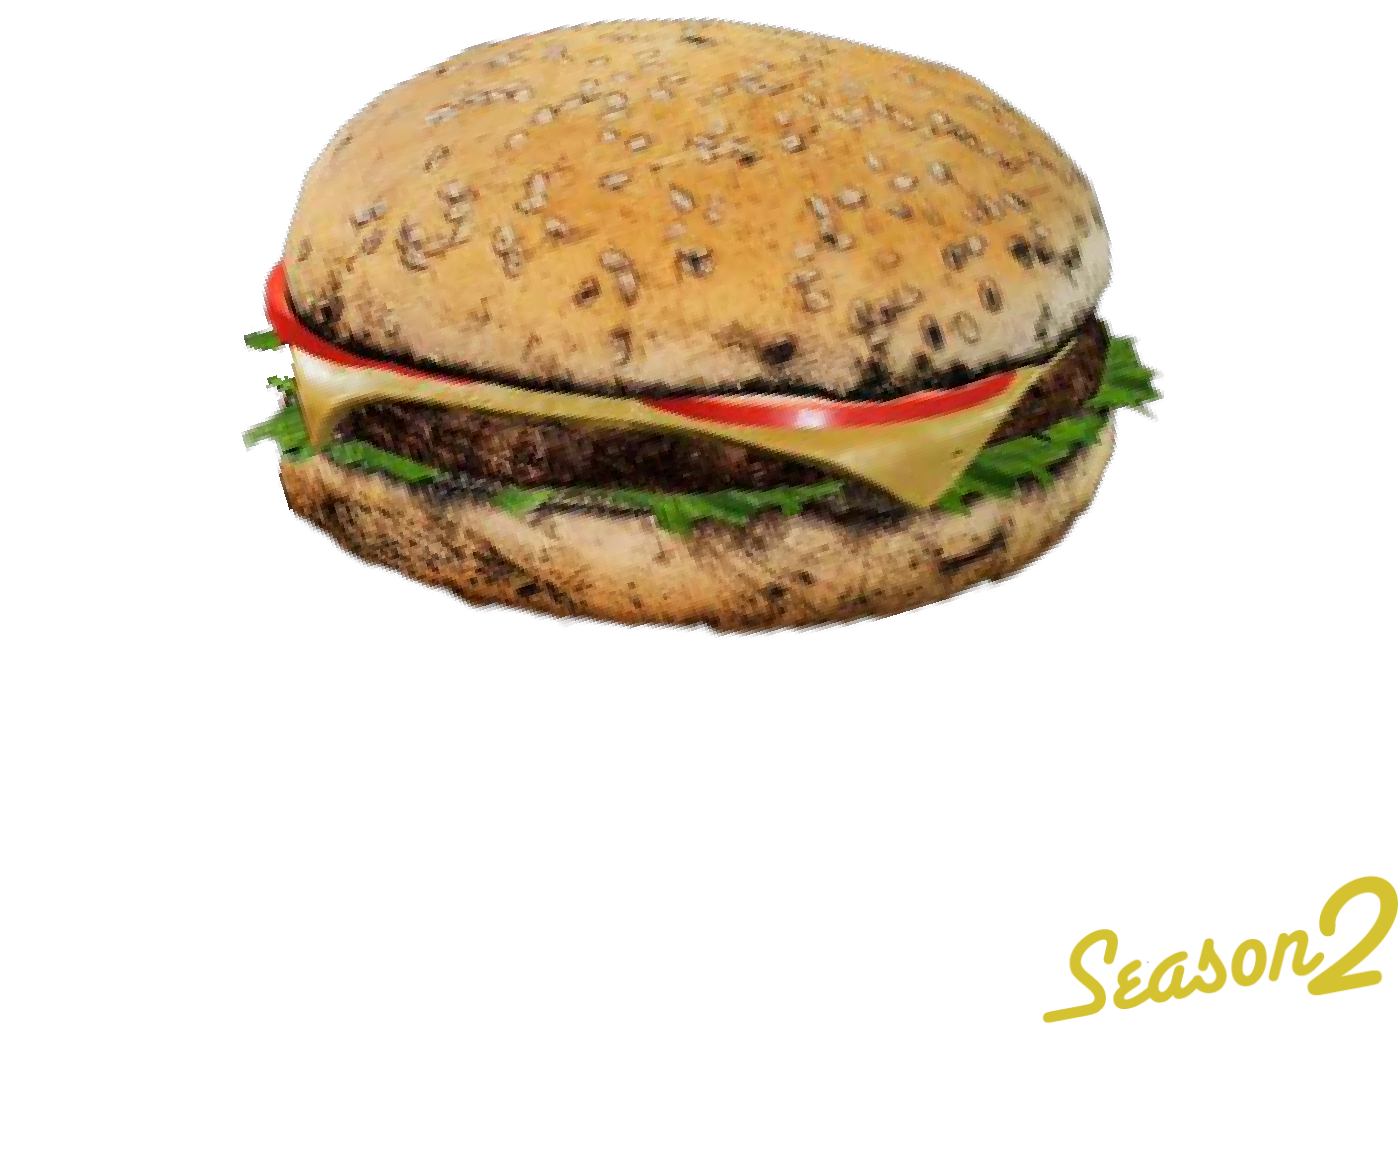 WAR OF THE SCUM season2